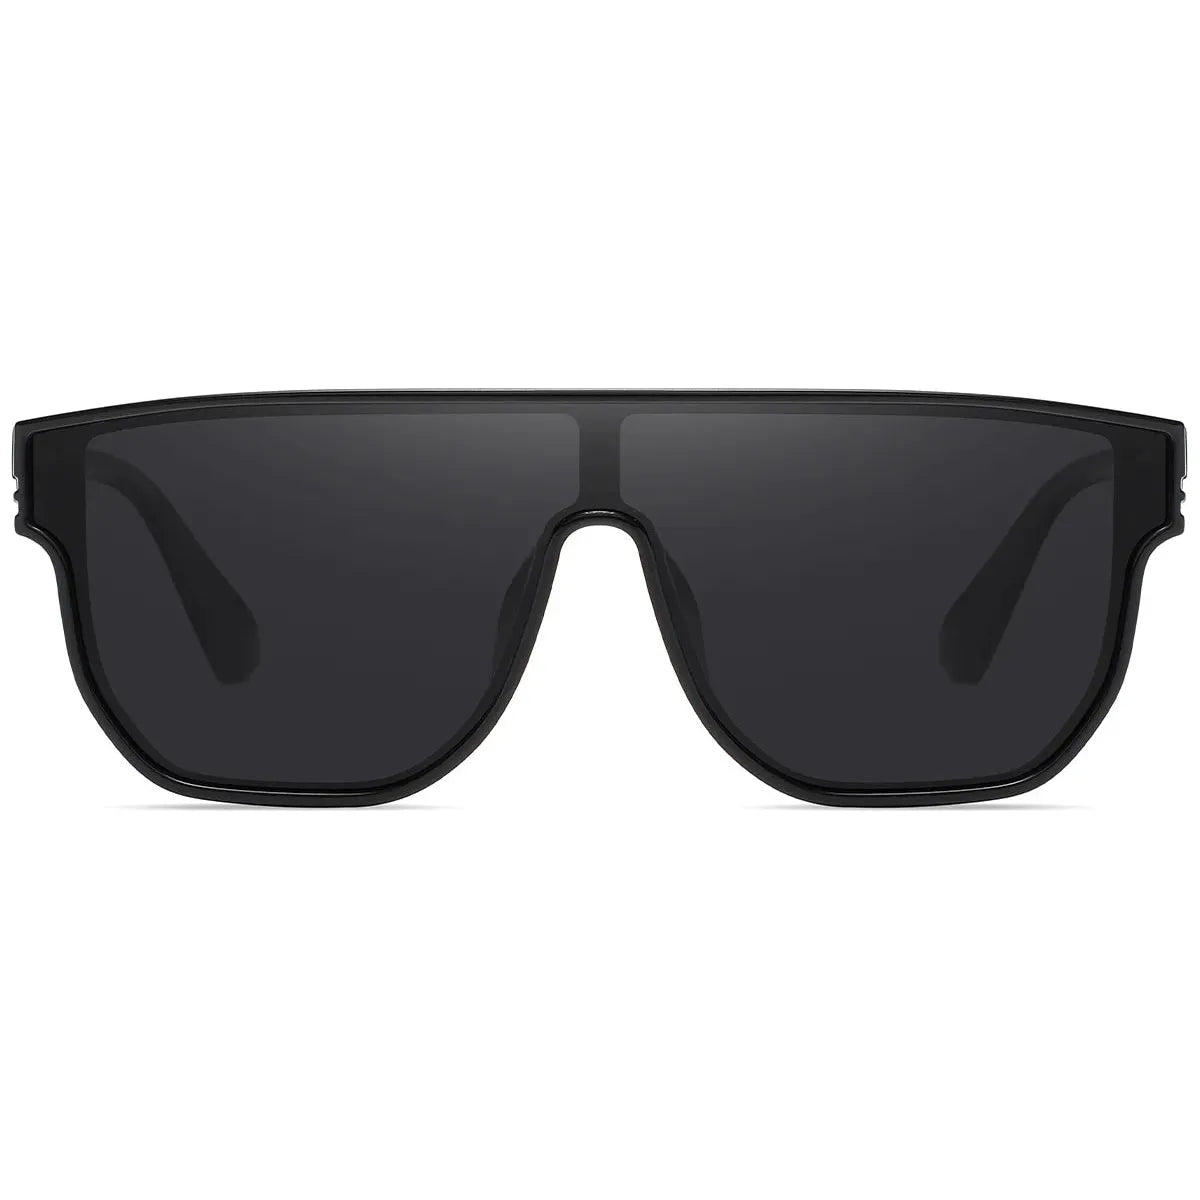 Candye Geometric Sunglasses SG5273 